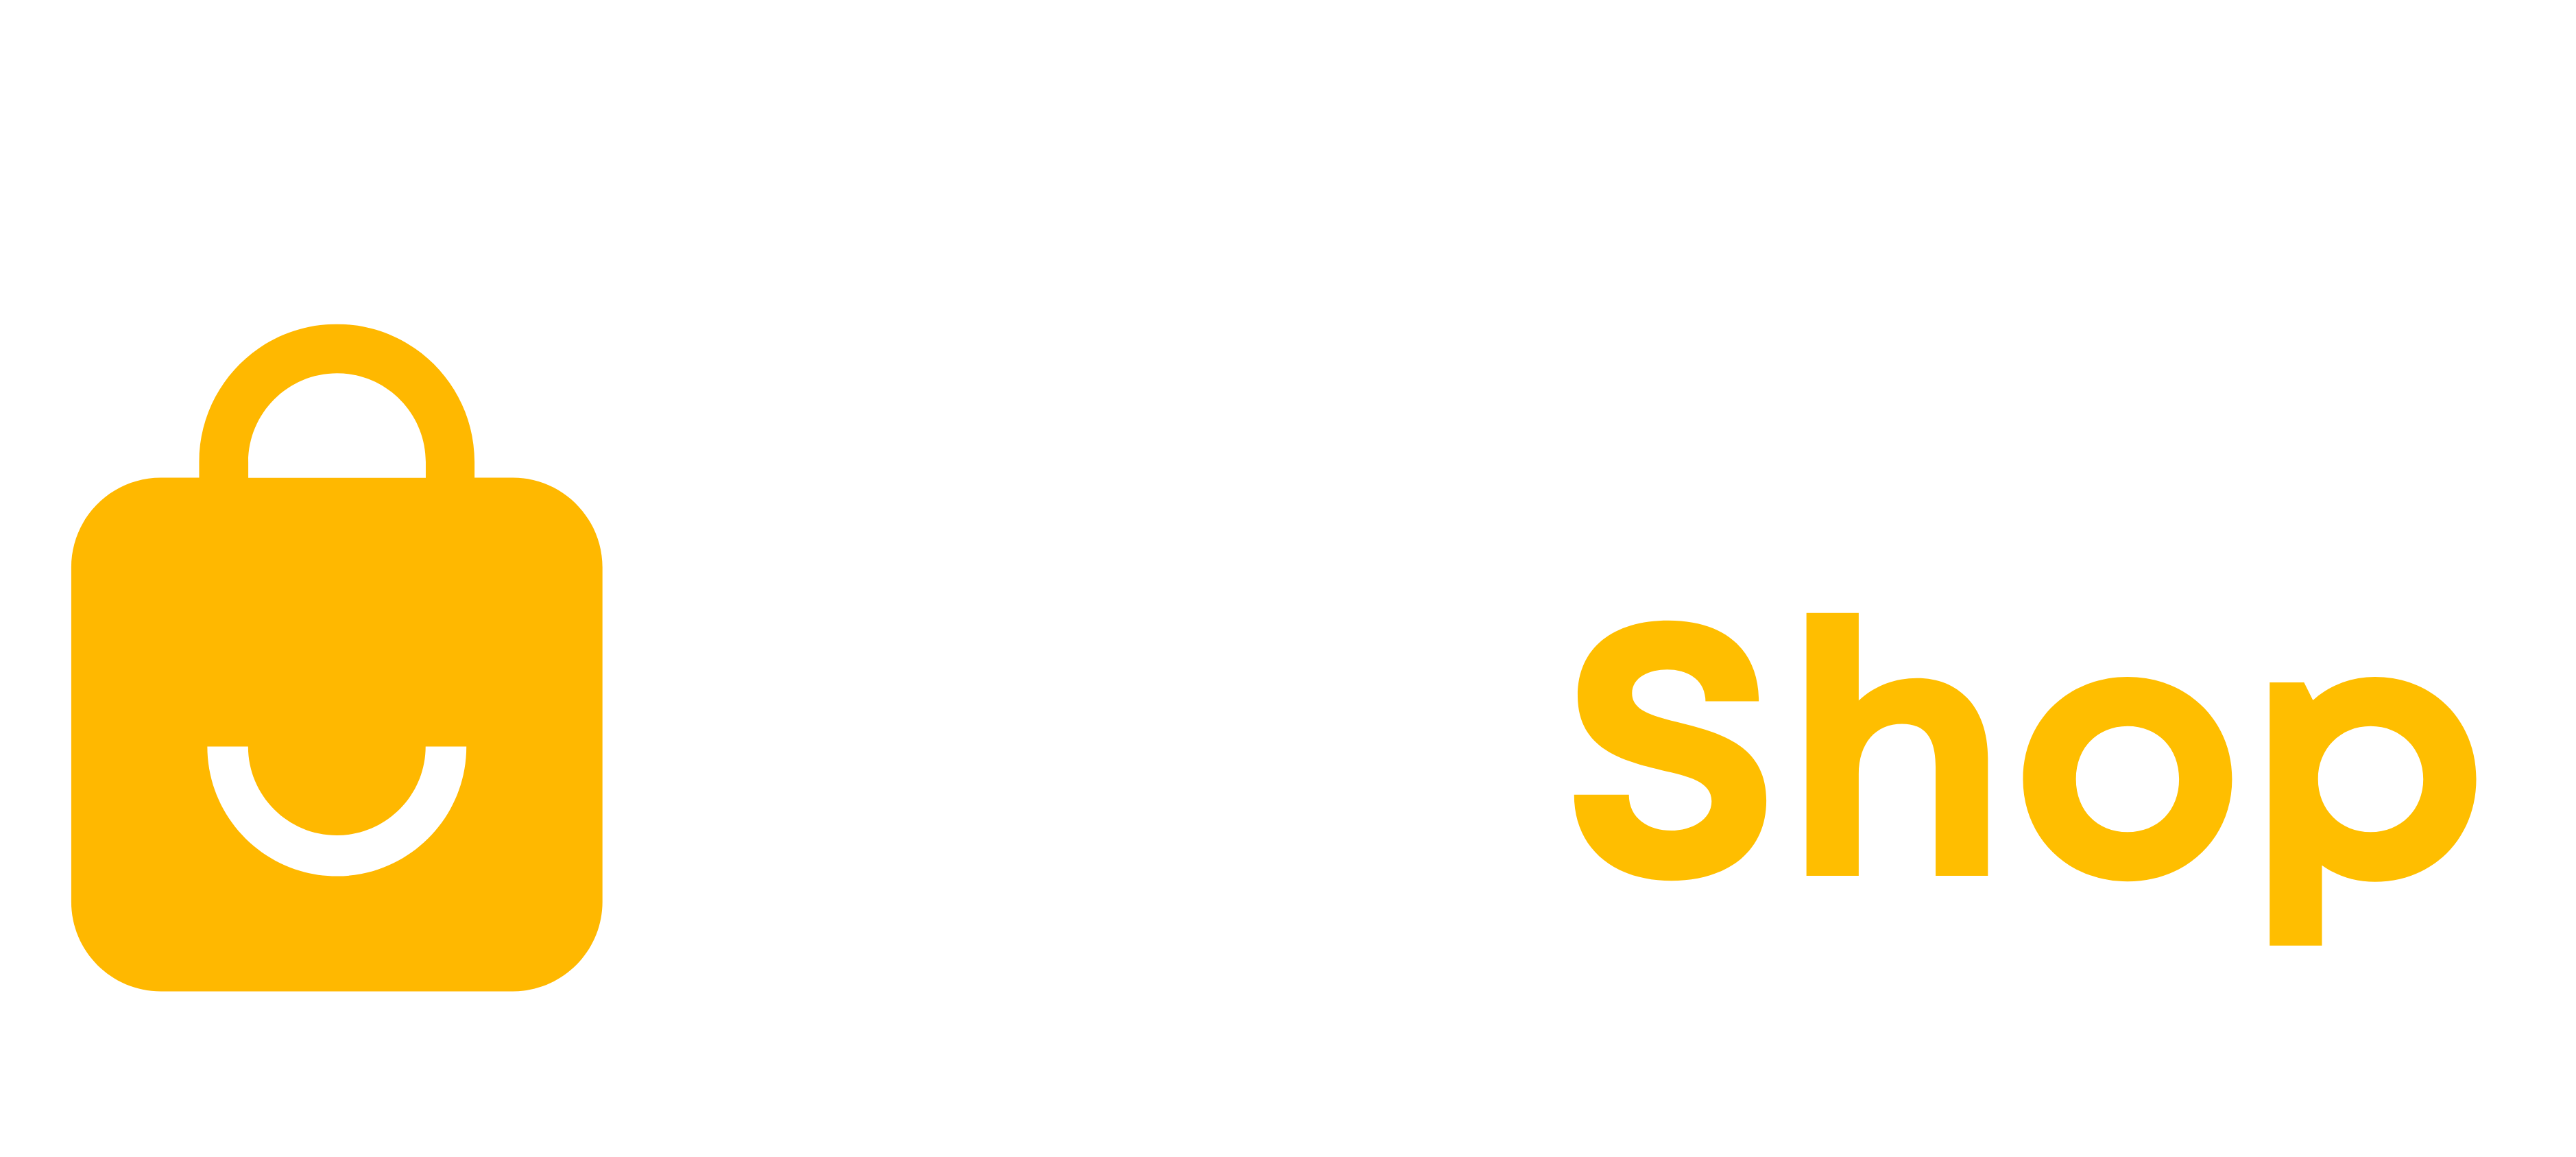 MABSHOP